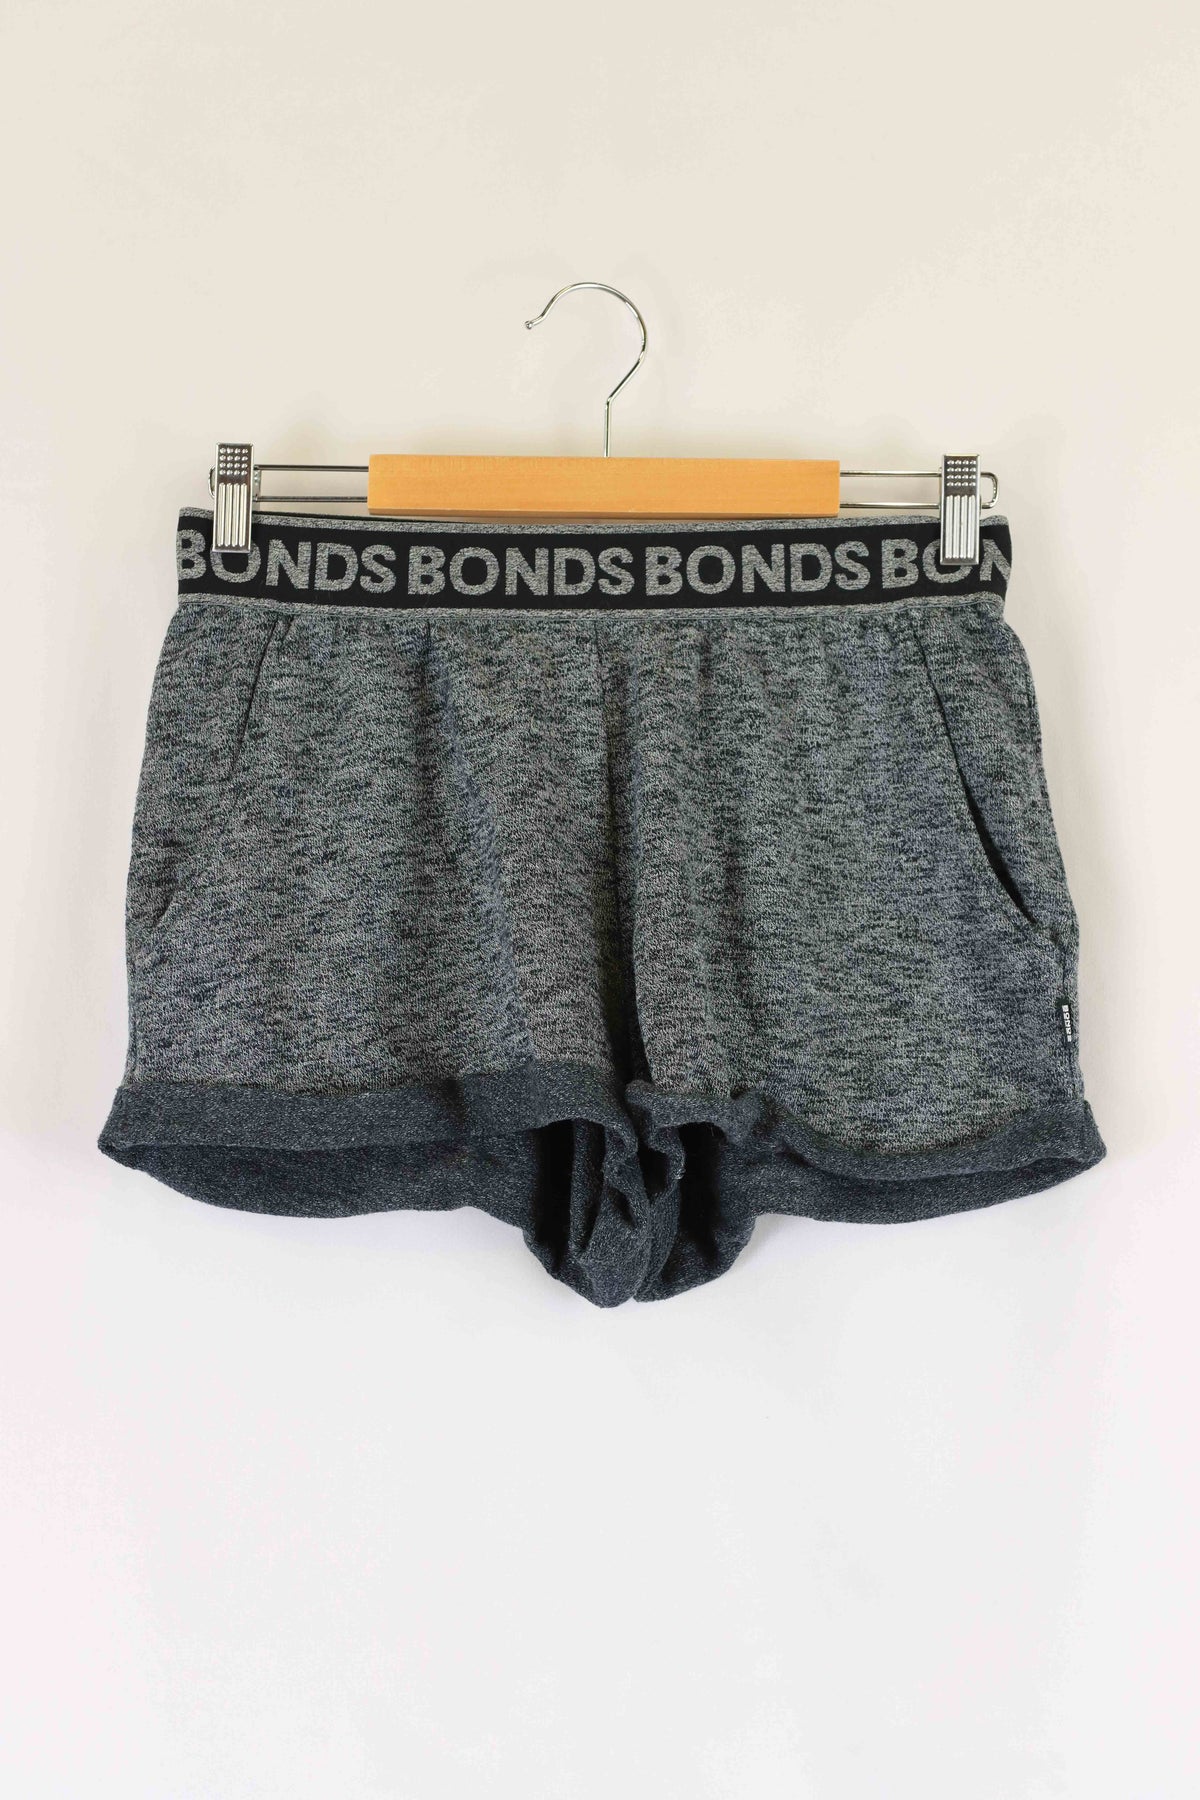 Bonds Grey Shorts S